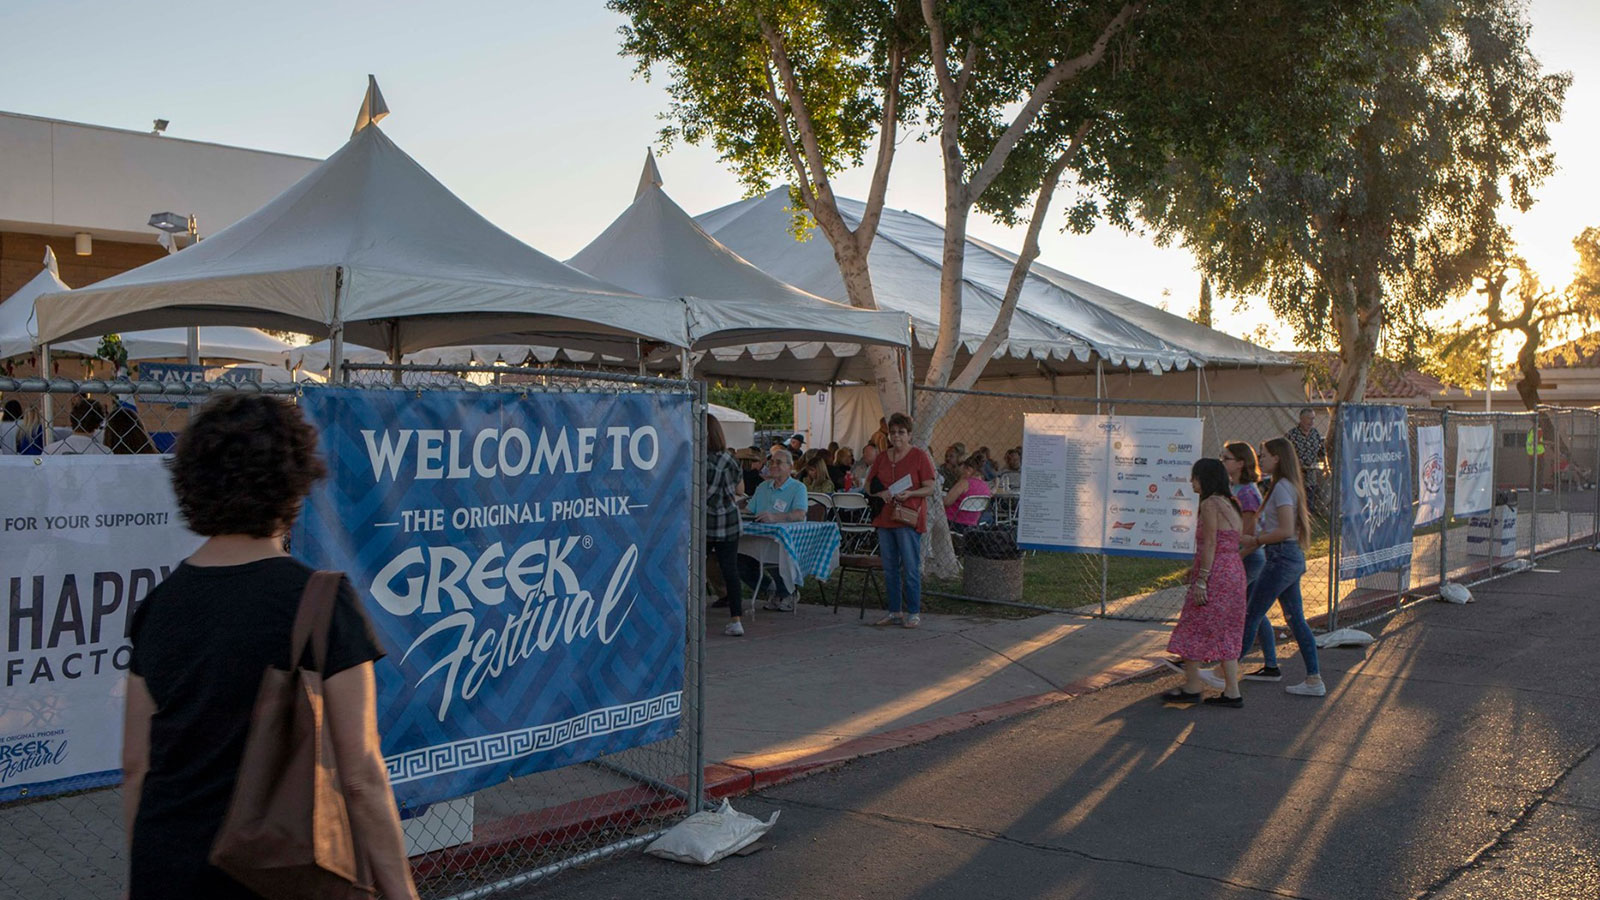 Longrunning Original Phoenix Greek Festival returns this weekend